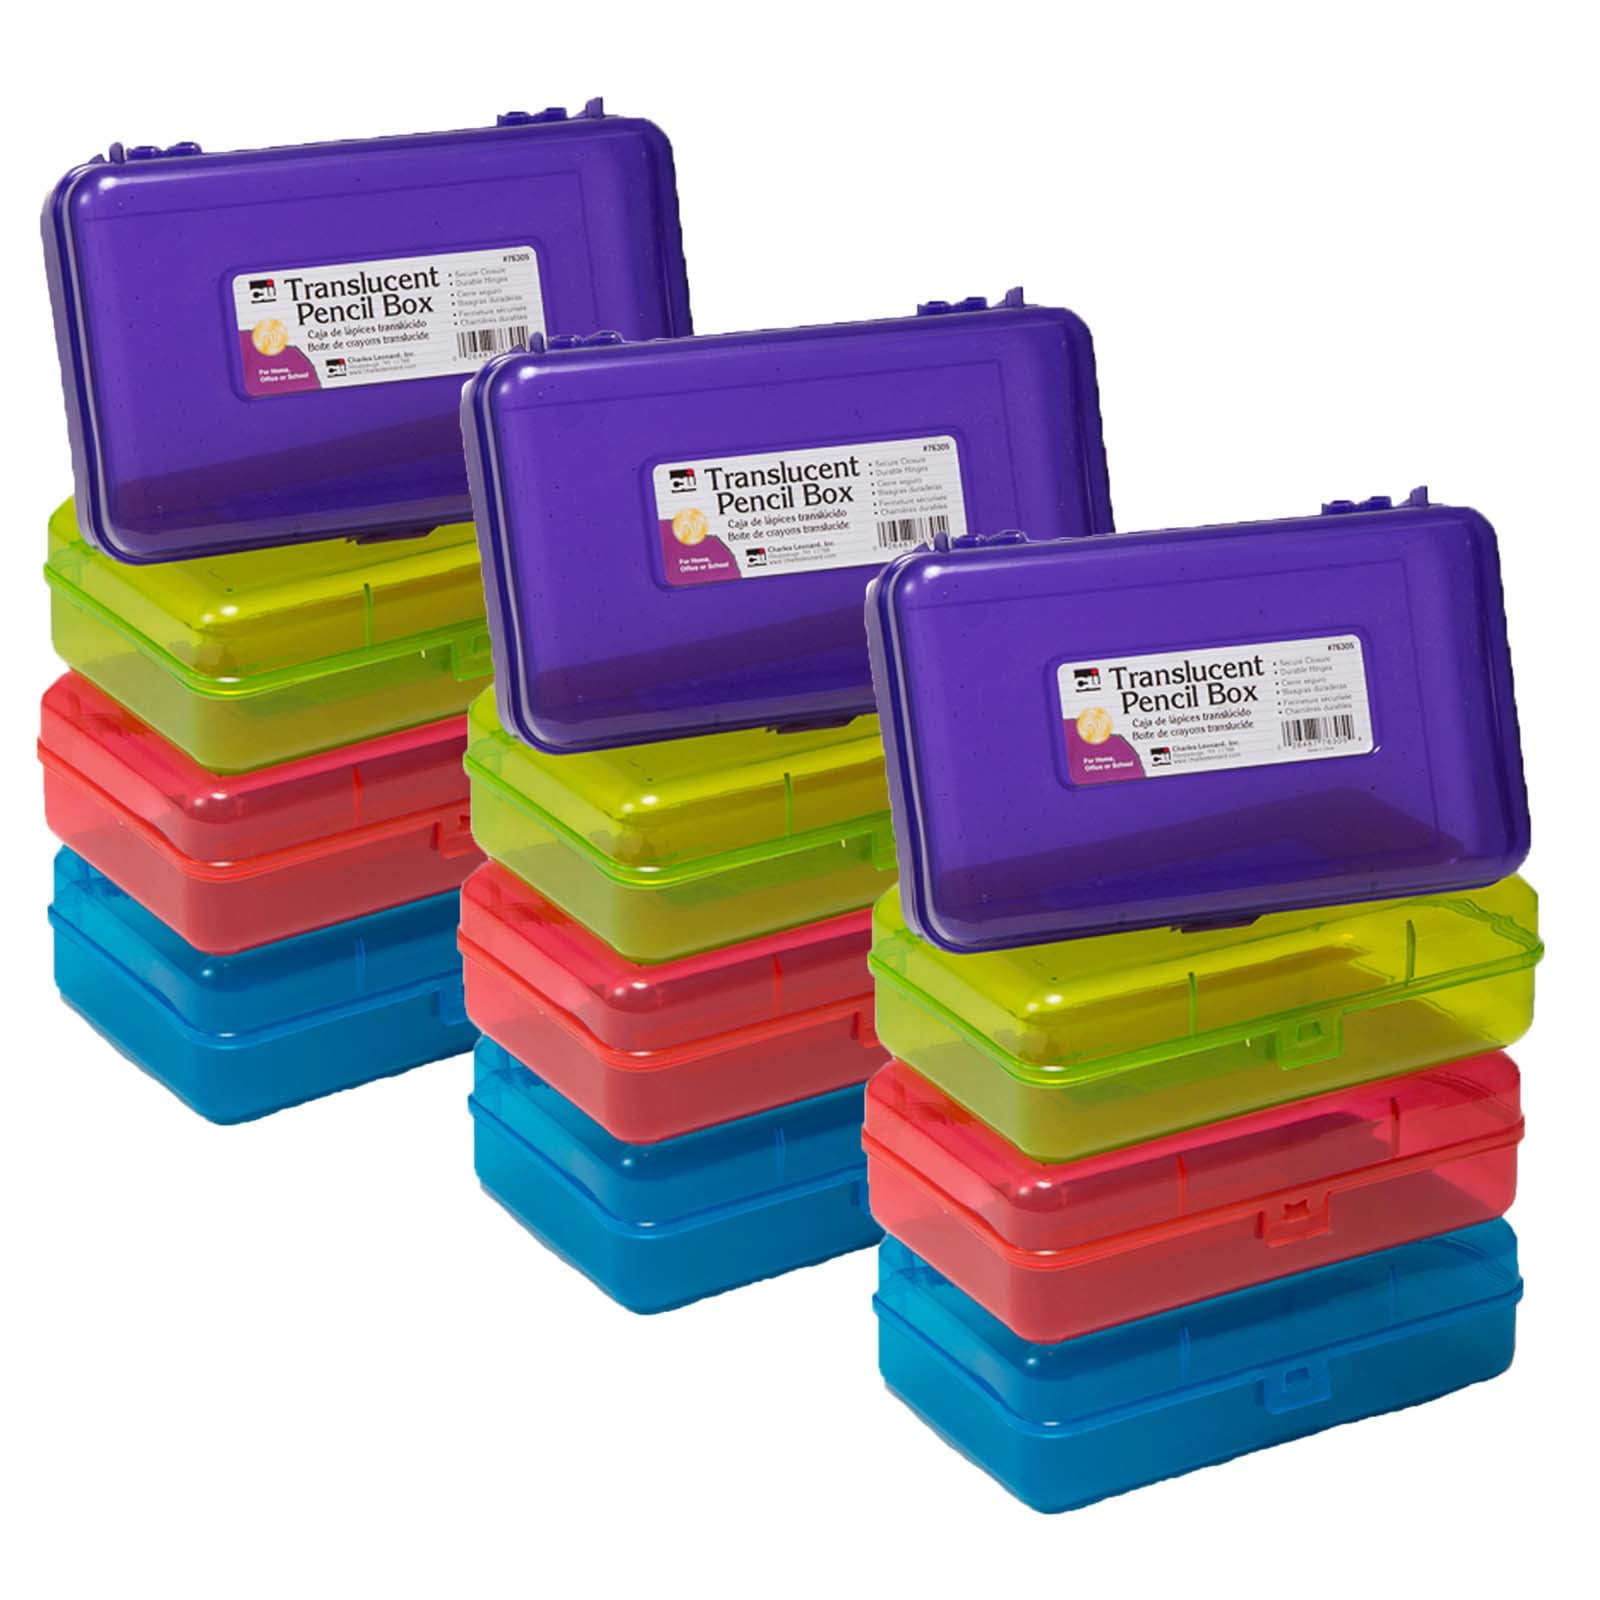 Colorful Glitter Plastic Pencil Boxes, Translucent Pencil Boxes